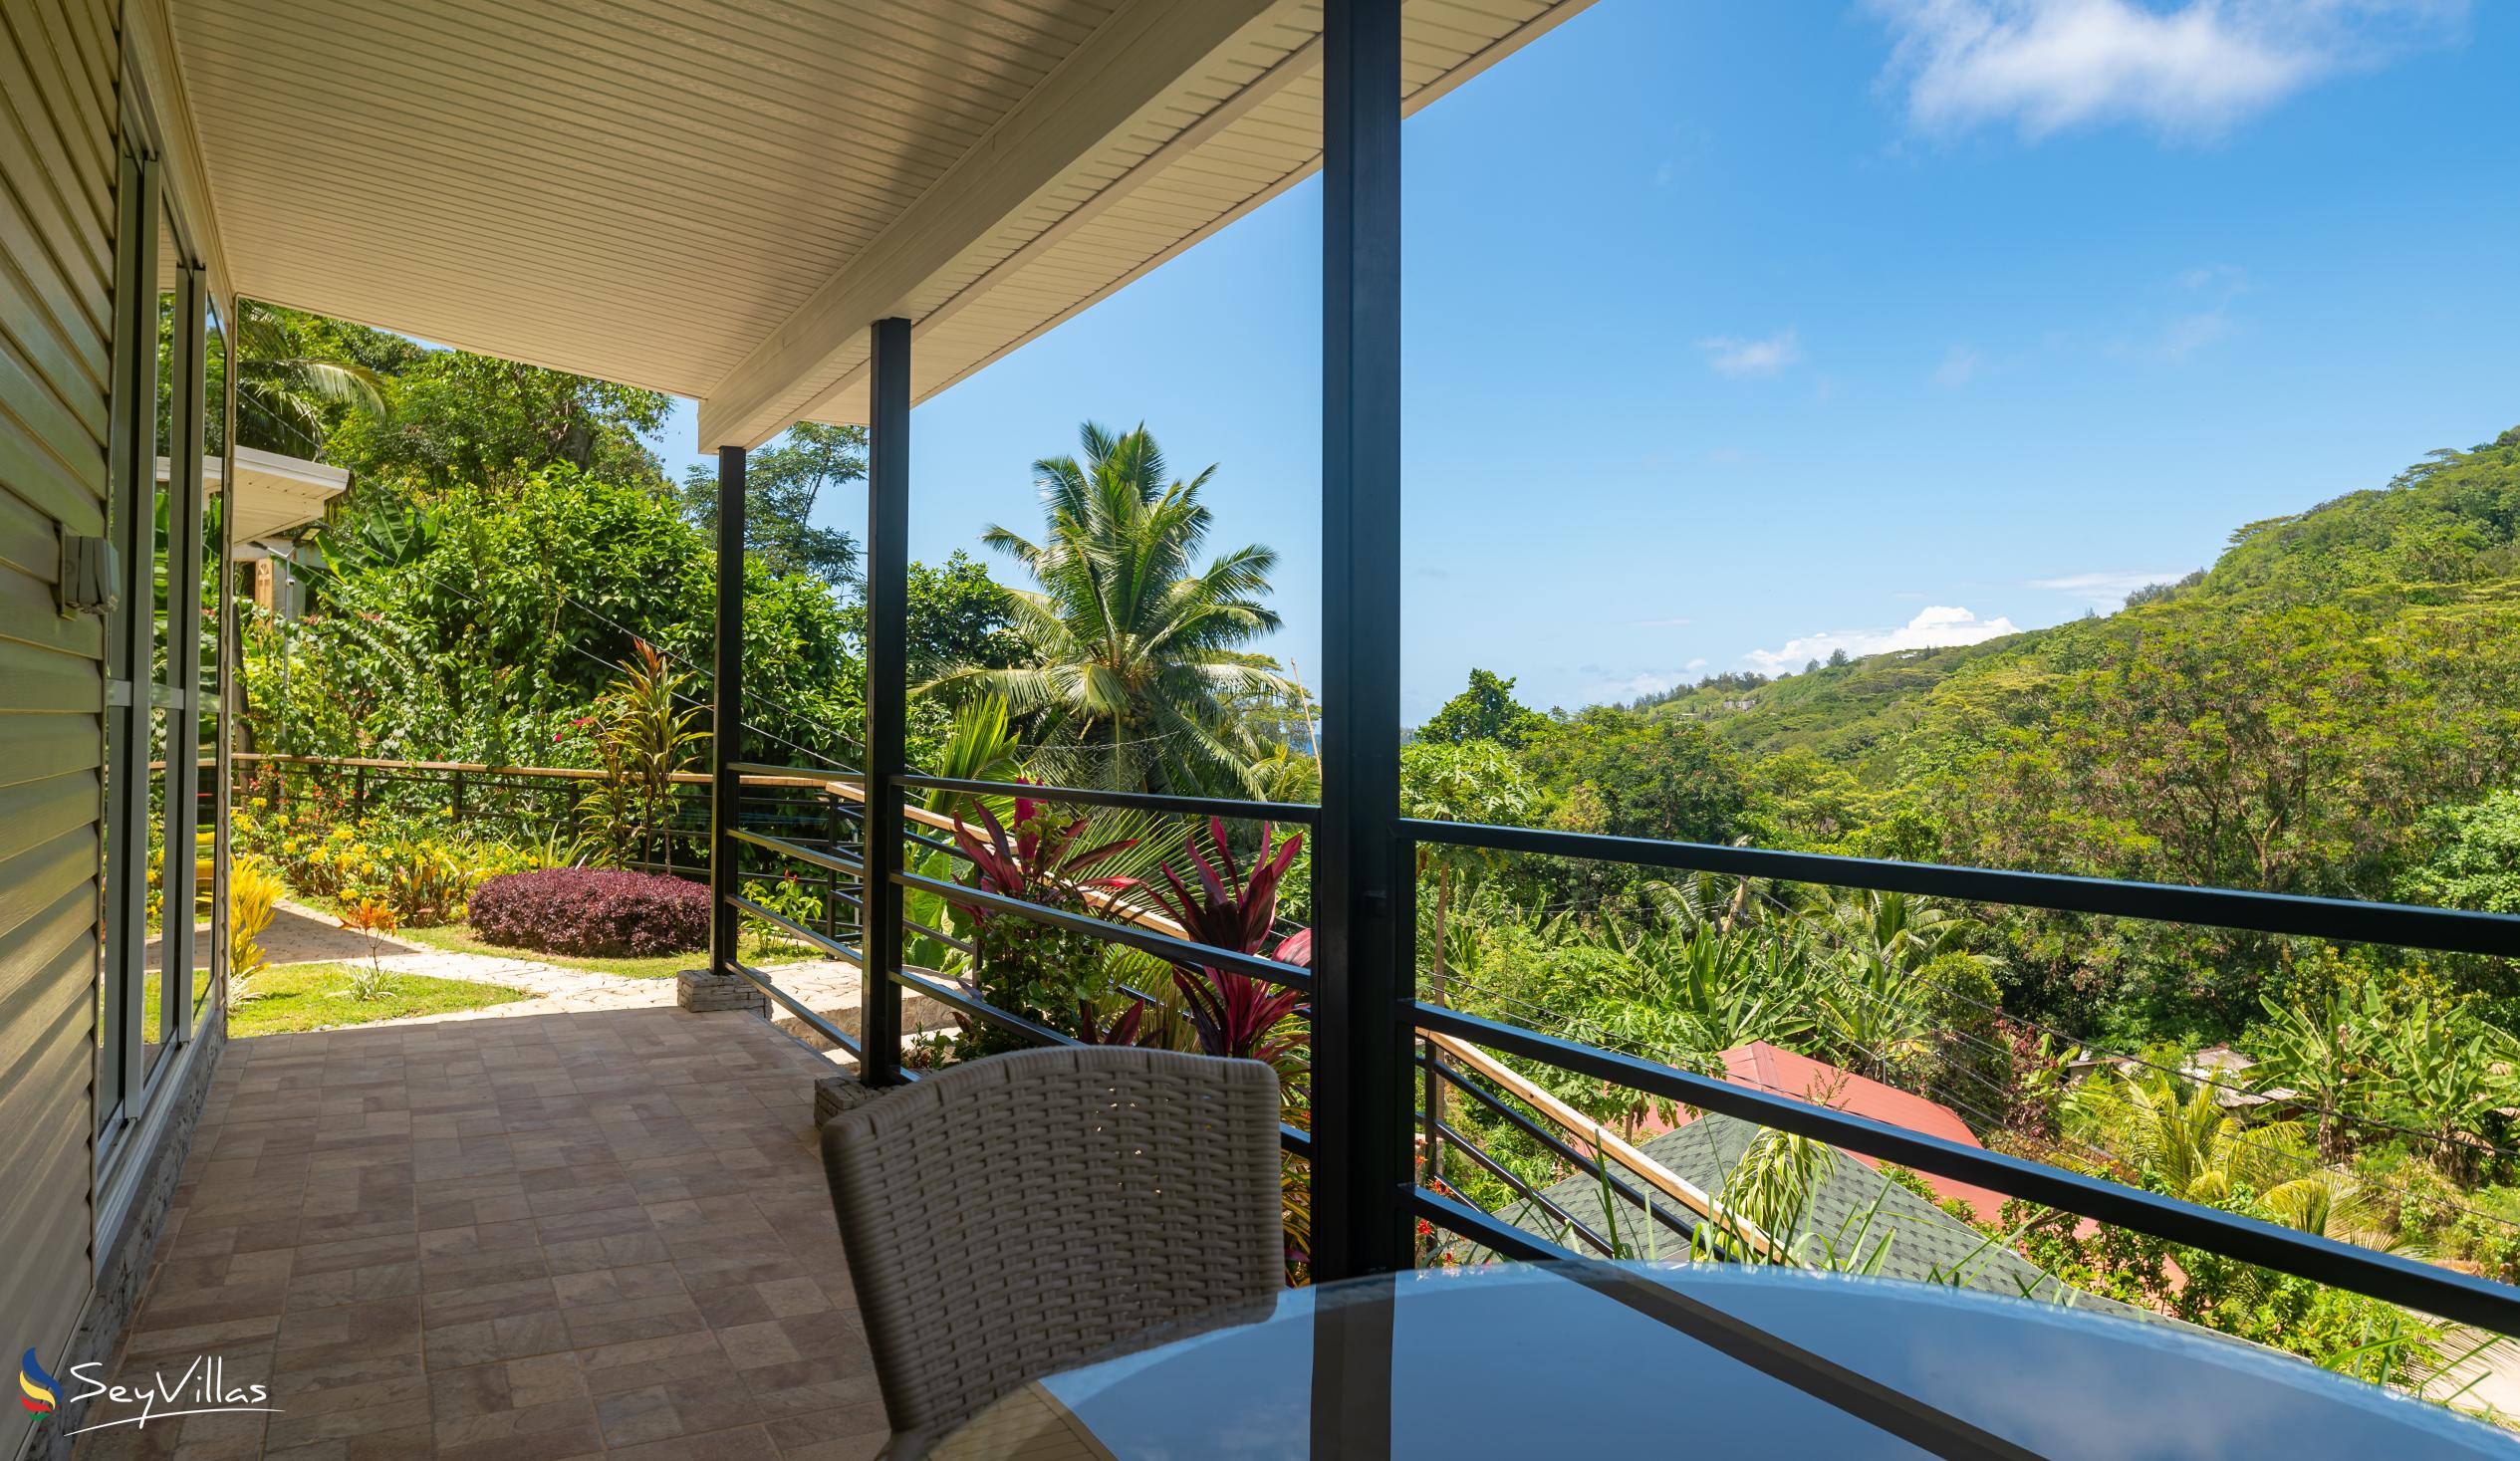 Foto 41: Takamaka Sky Villas - Villa mit 1 Schlafzimmer - Mahé (Seychellen)